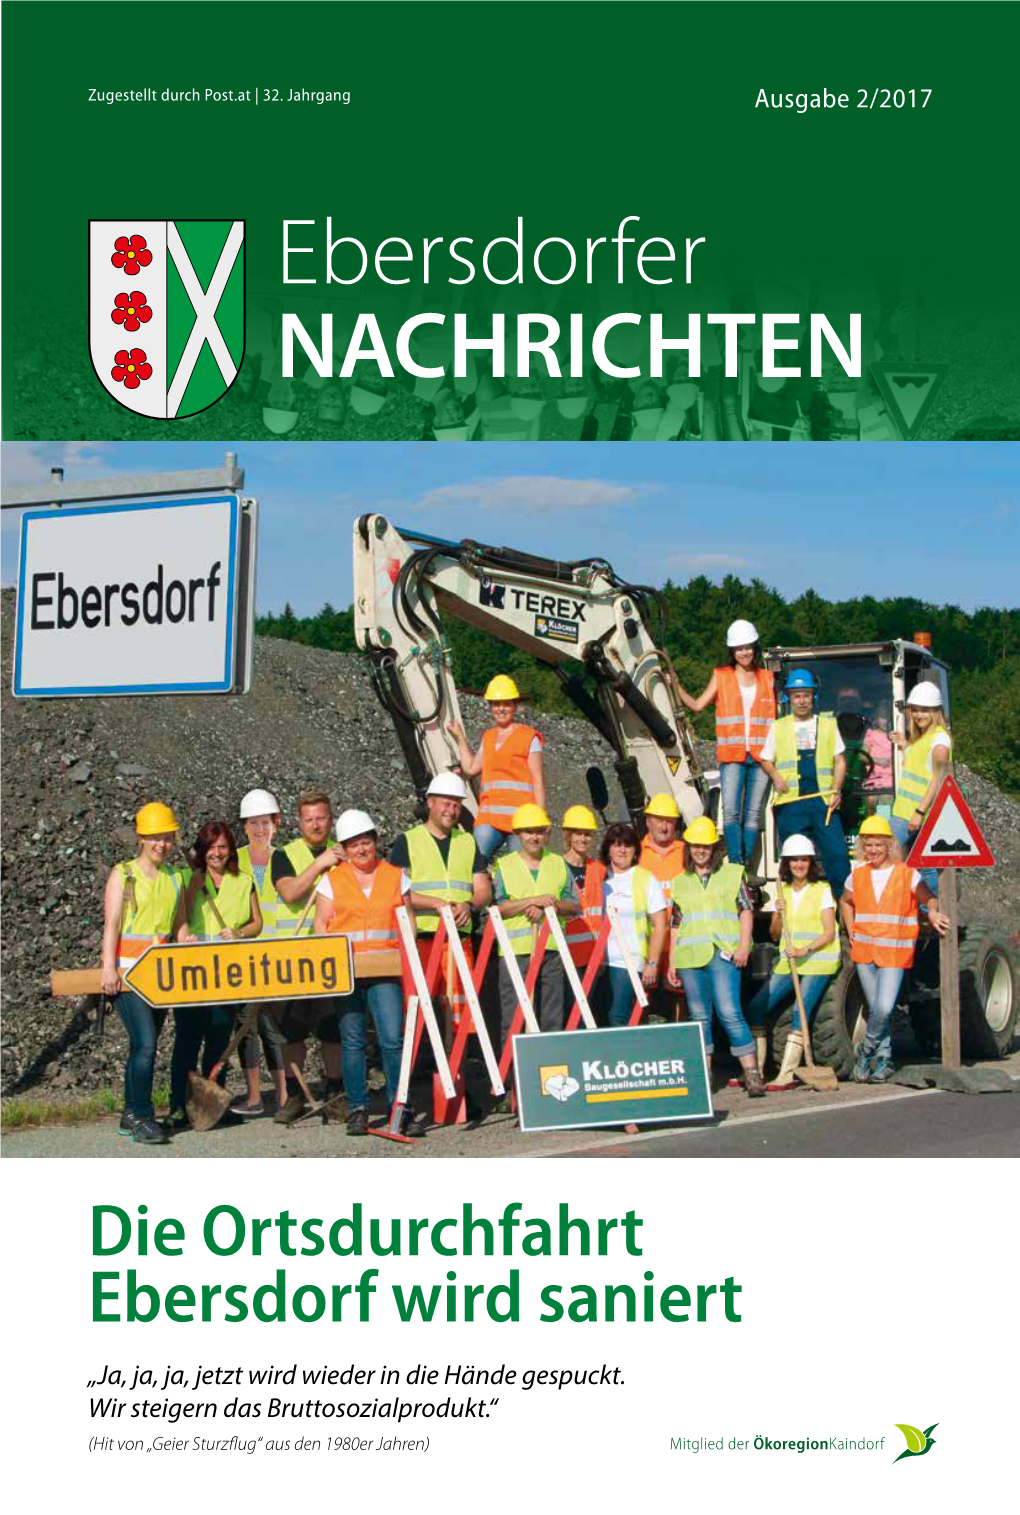 Ebersdorfer Nachrichten 2/2017